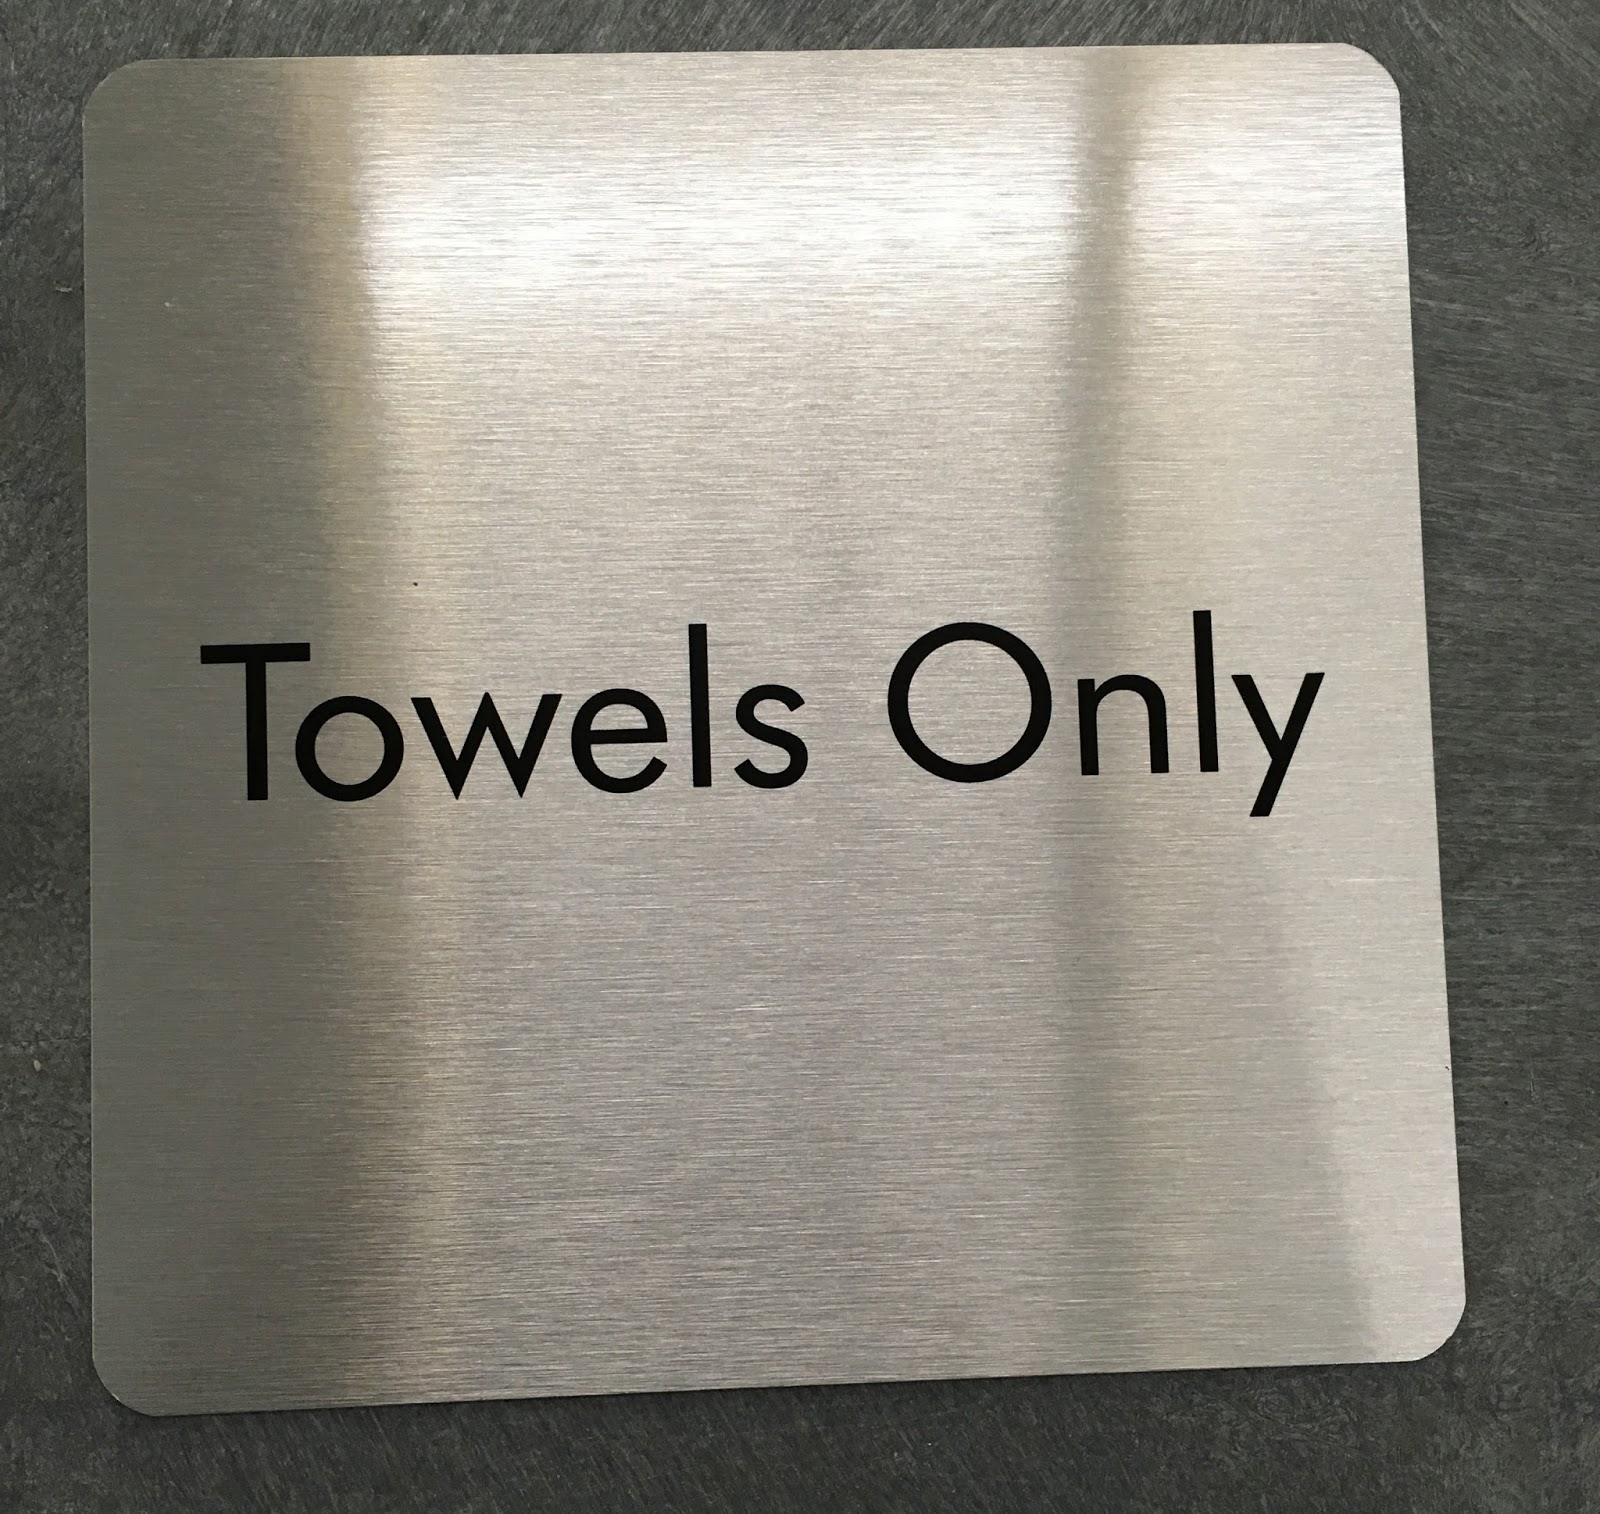 towels2bonly